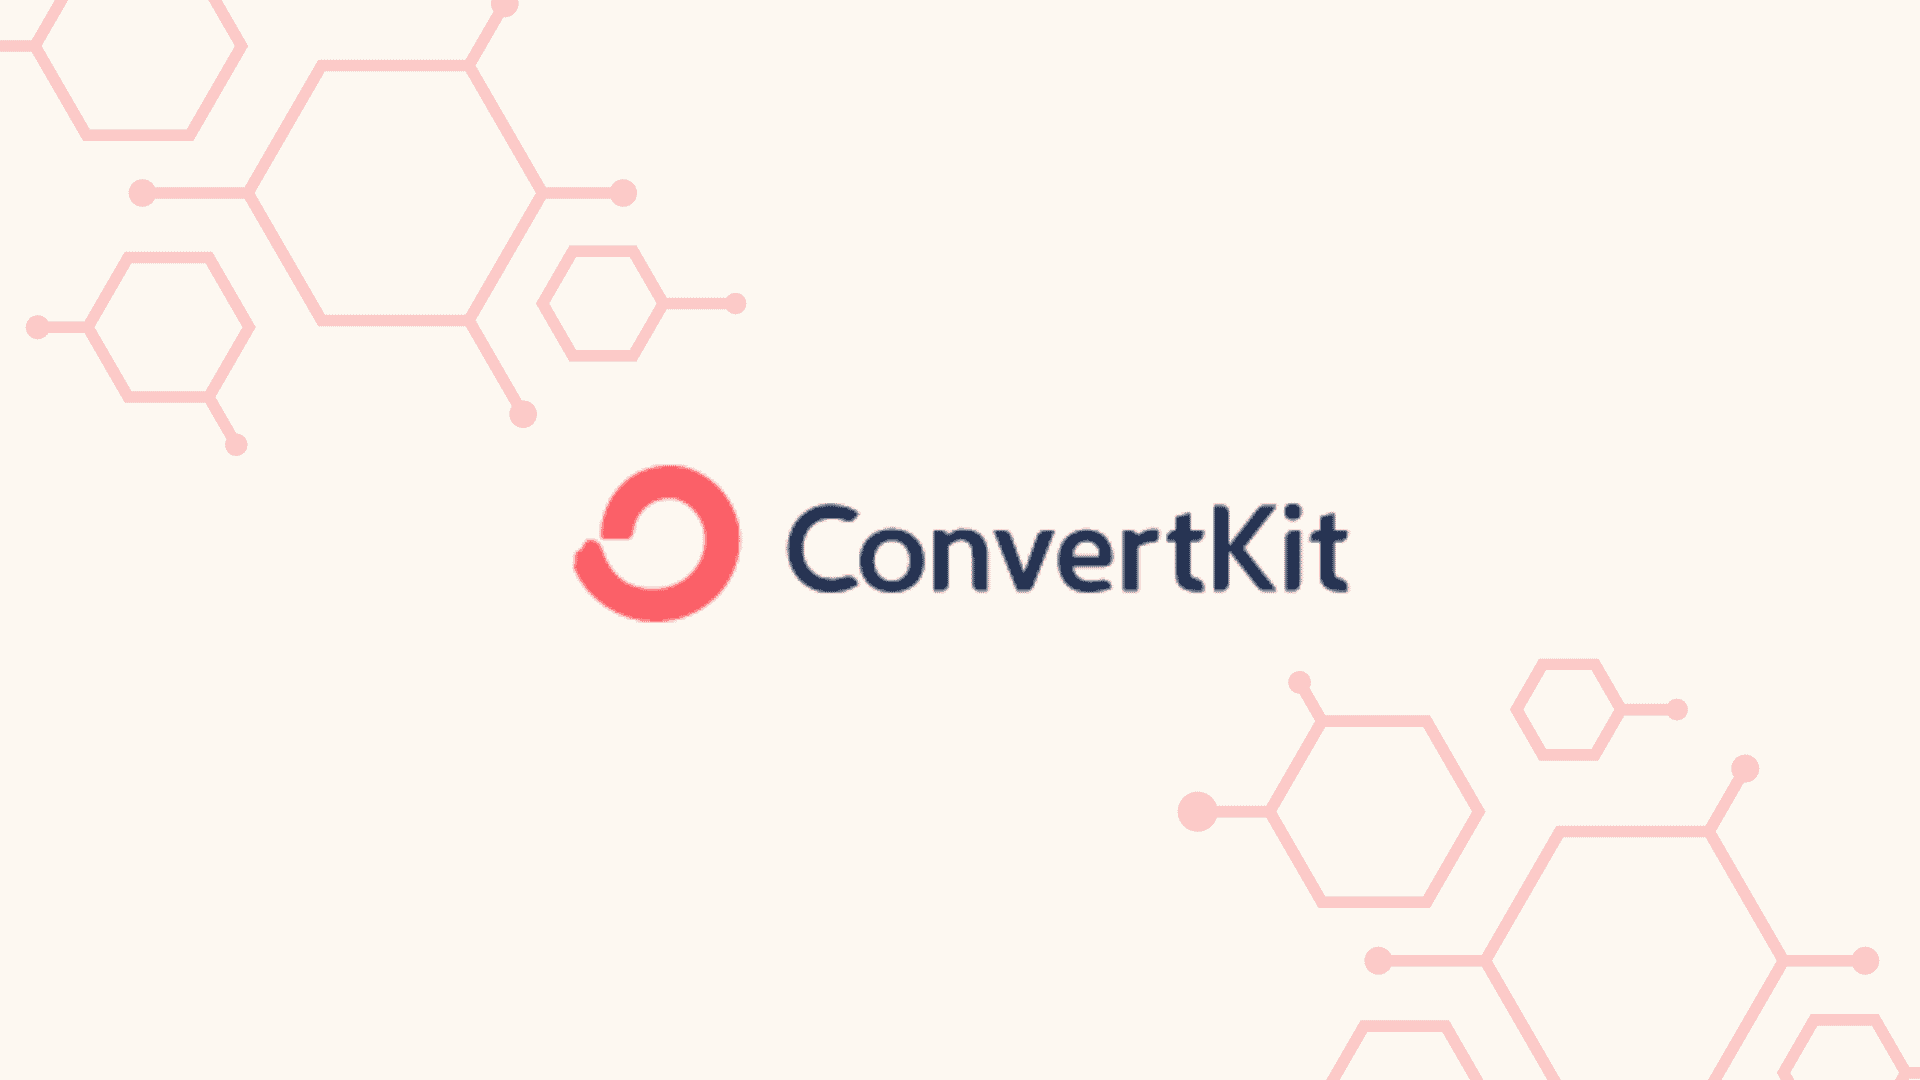 ConvertKit Logo